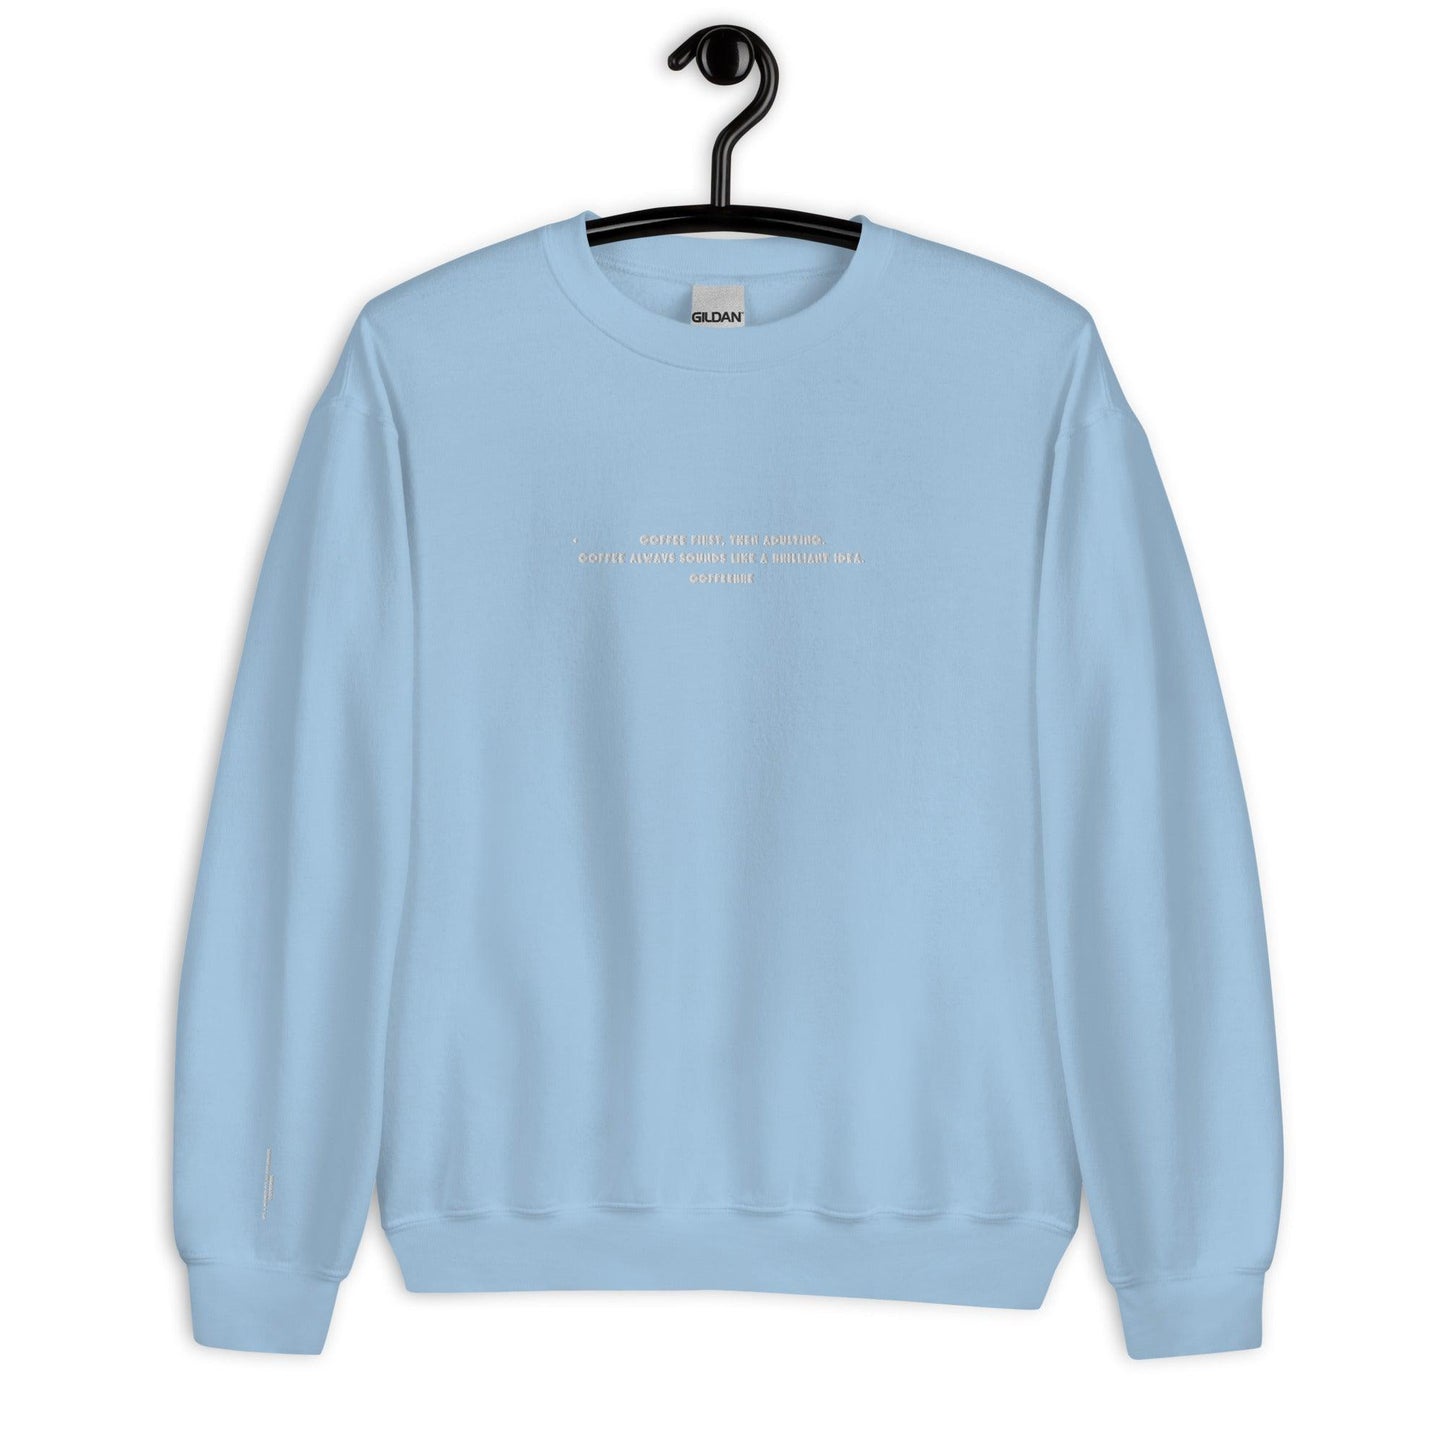 Embroidered Coffee & Lifestyle Unisex Sweatshirt - COFFEEBRE